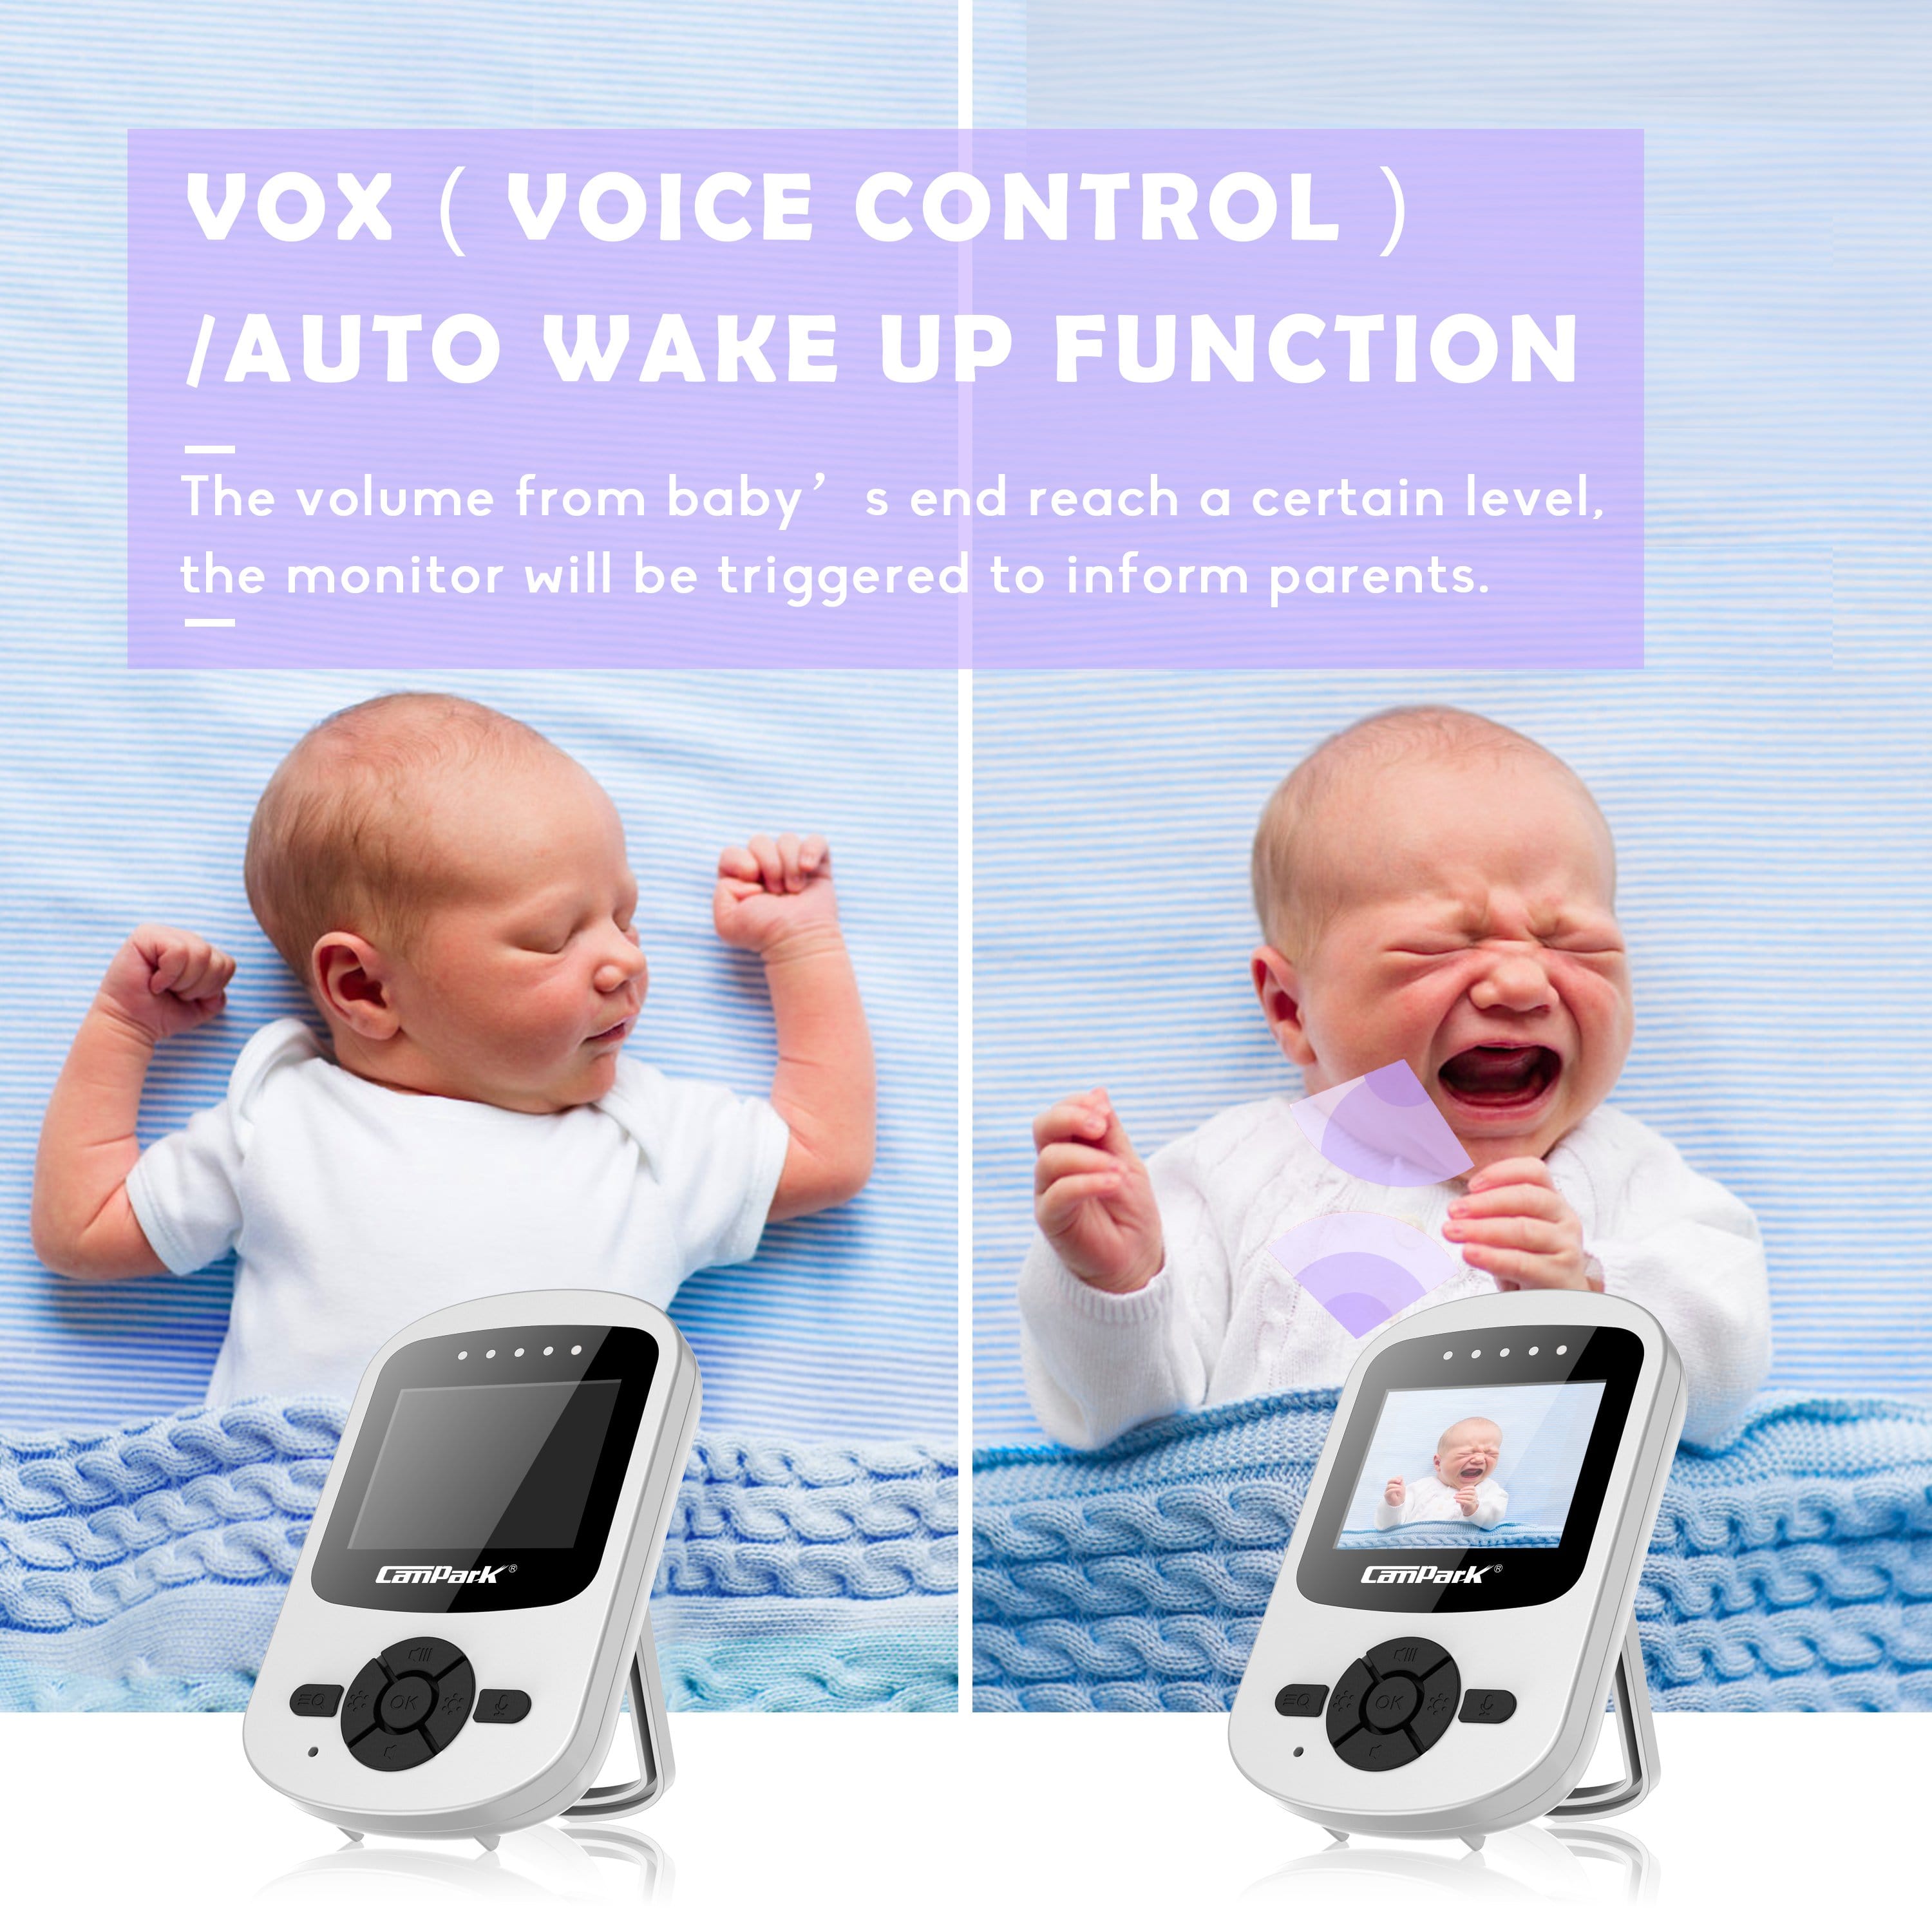 voice control auto wakeup function